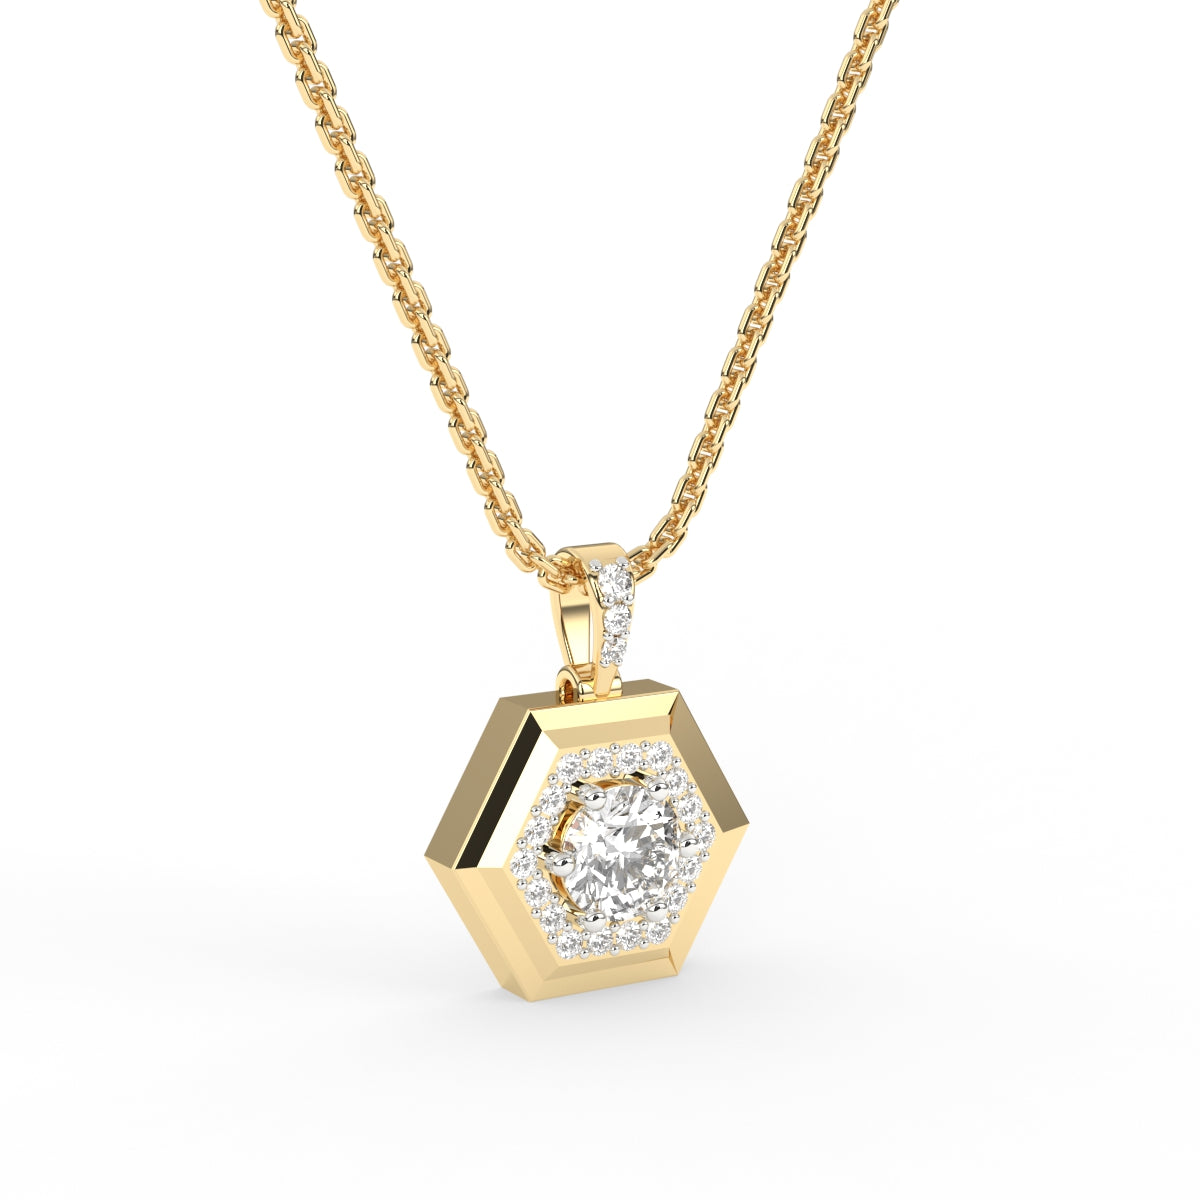 Hexagon diamond pendant